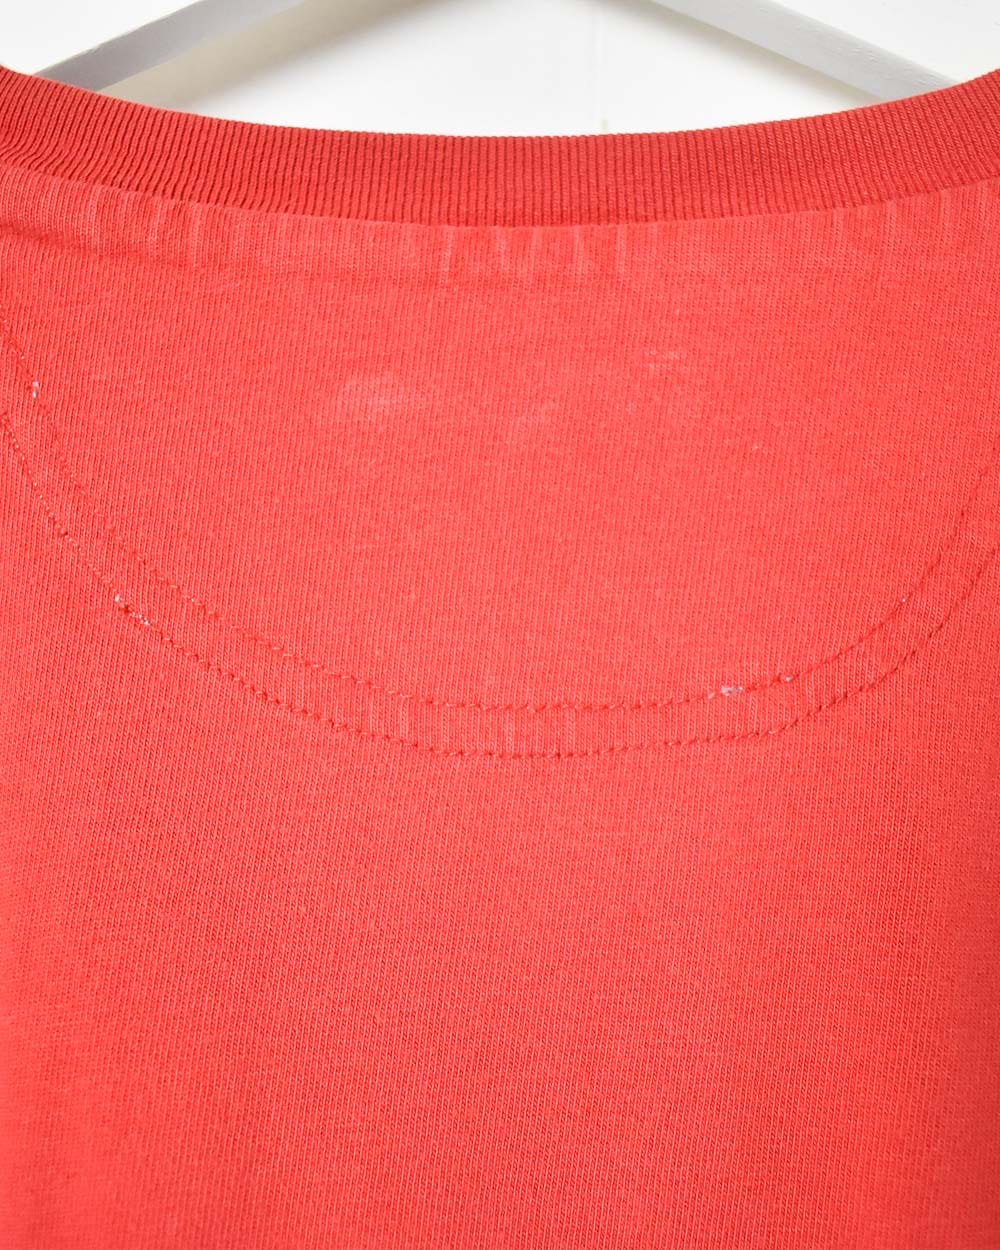 Red Champion T-Shirt - Large